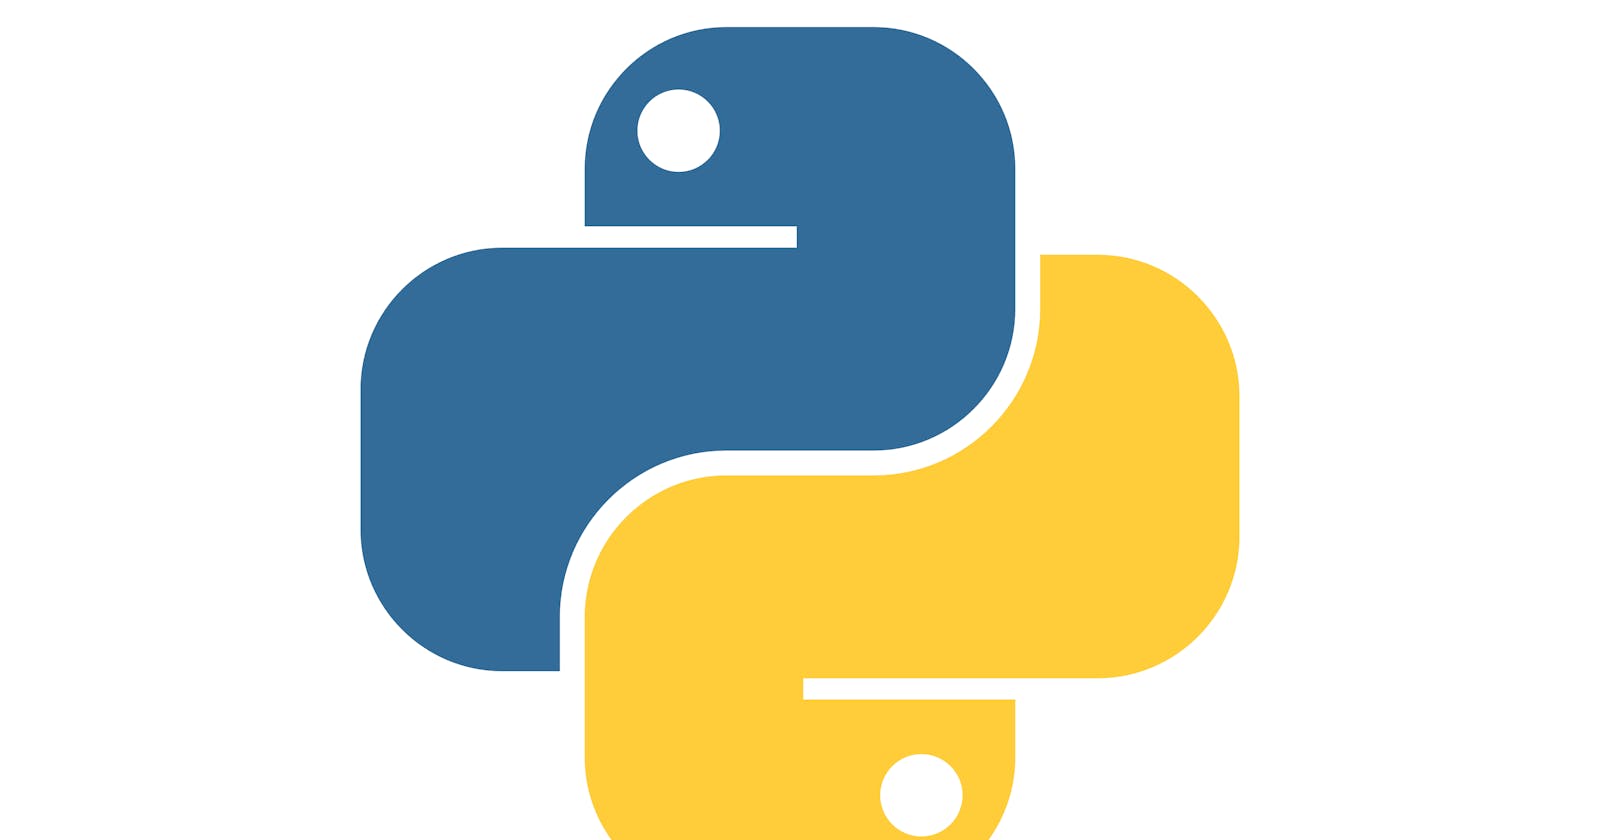 Python (Programming language)